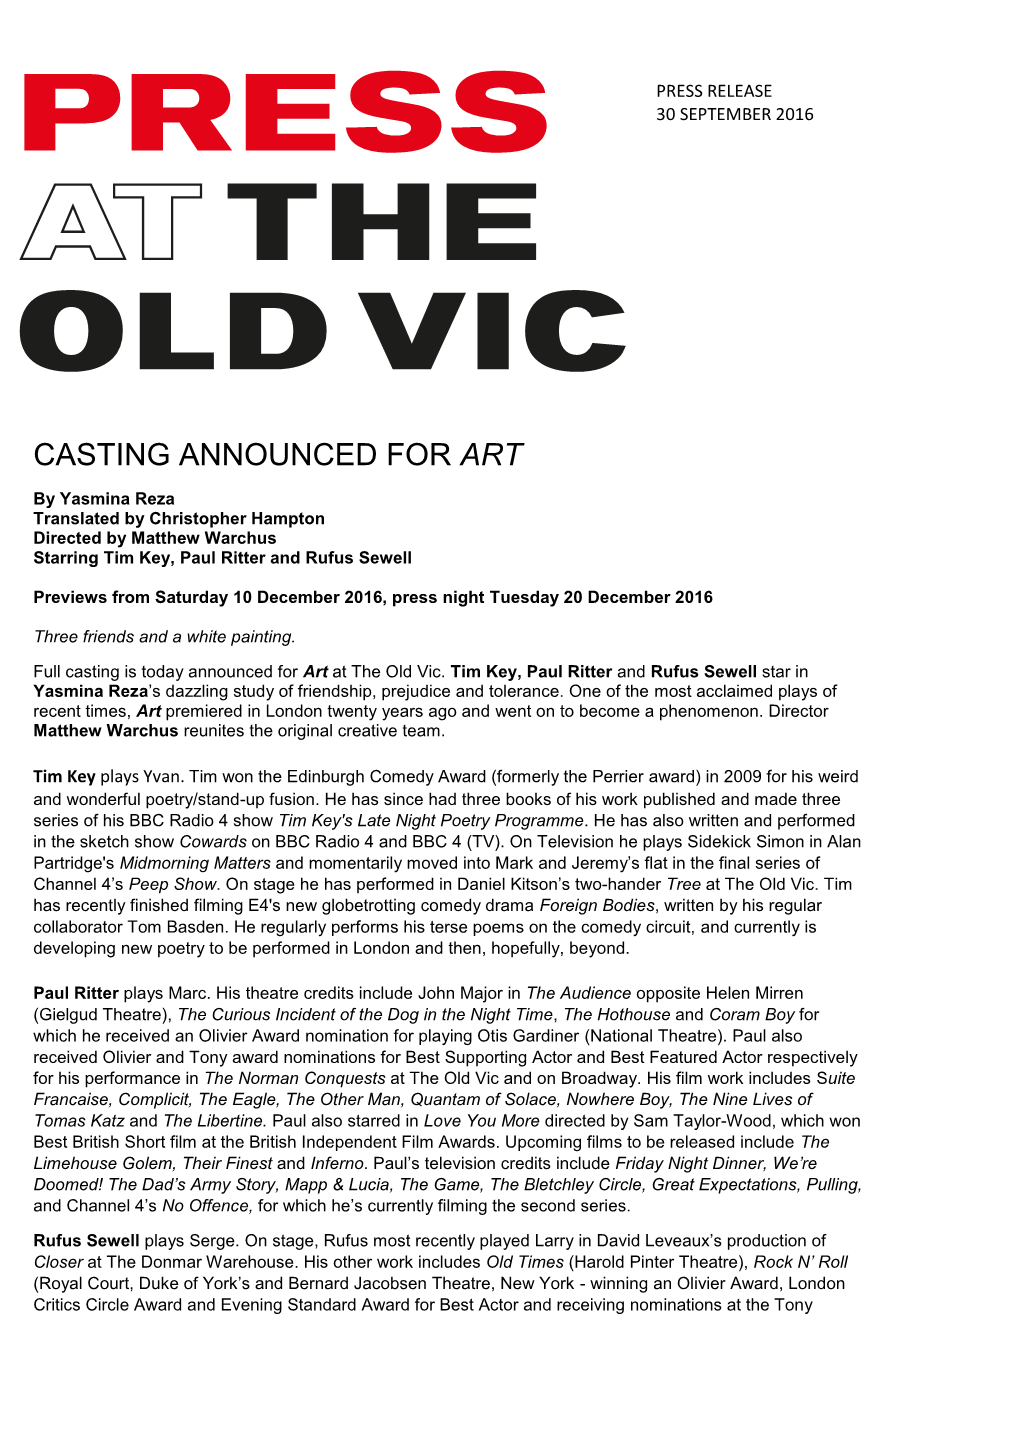 Casting Announced for Art